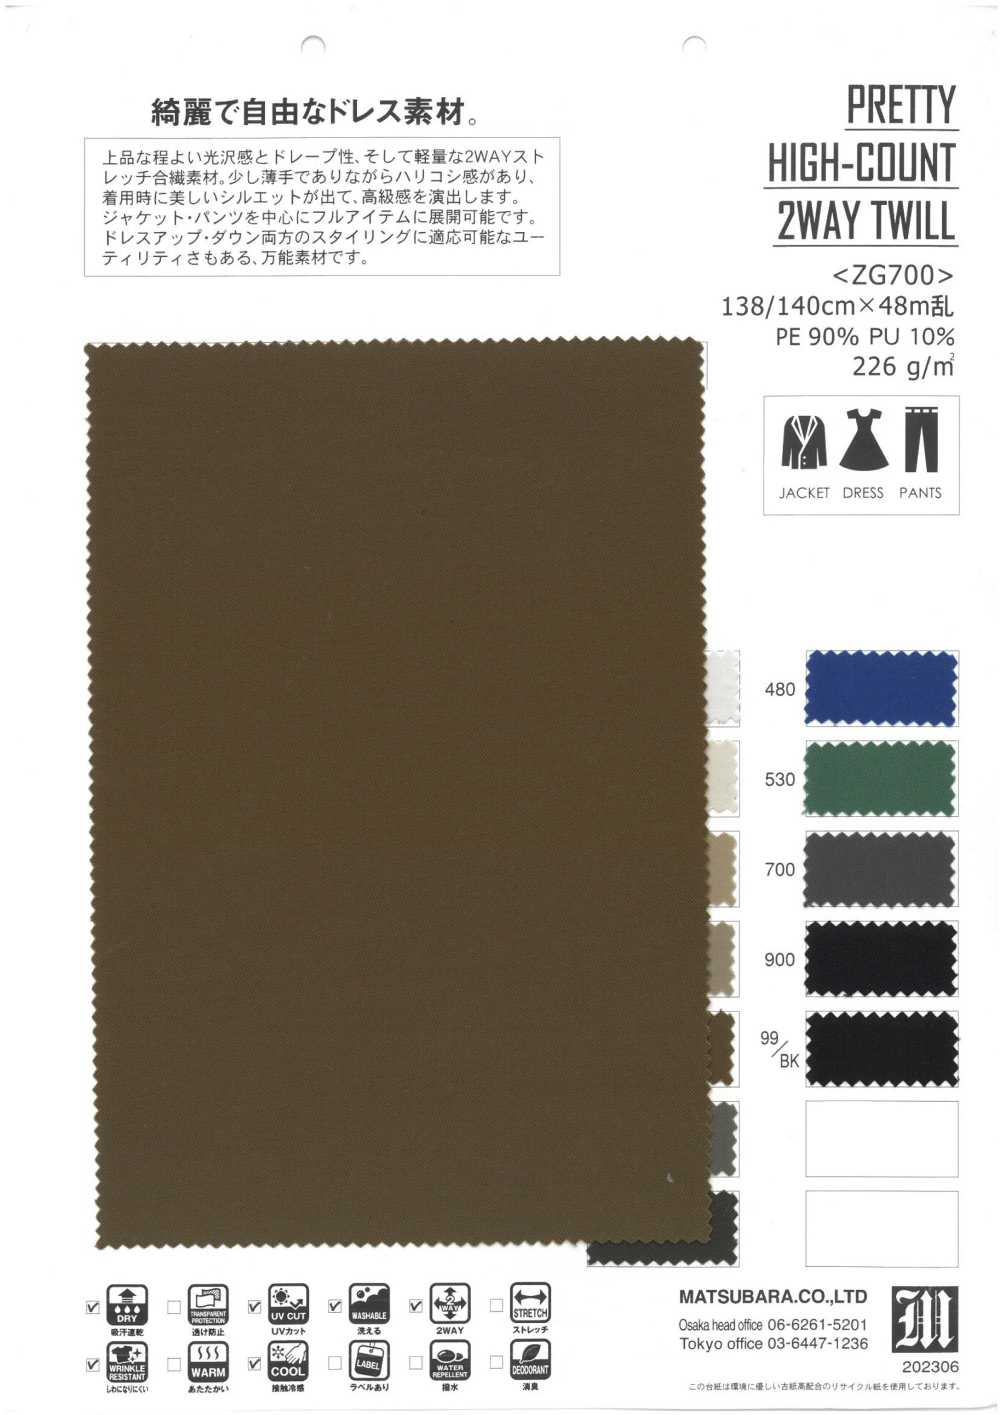 ZG700 JOLIE TWILL 2 VOIES À GRANDE QUALITÉ[Fabrication De Textile] Matsubara